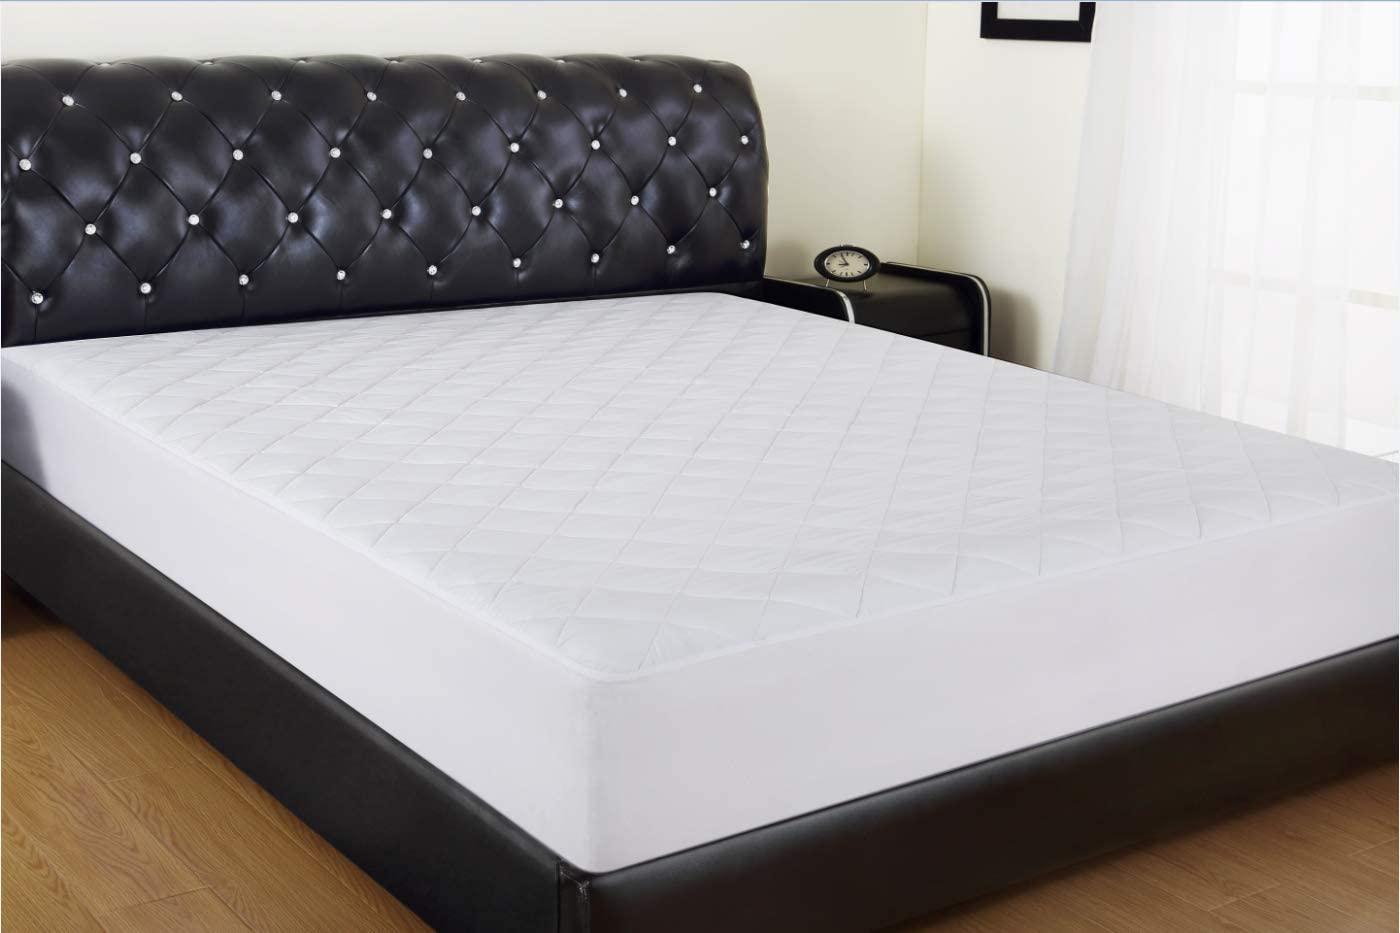 mattress pad vs mattress cover